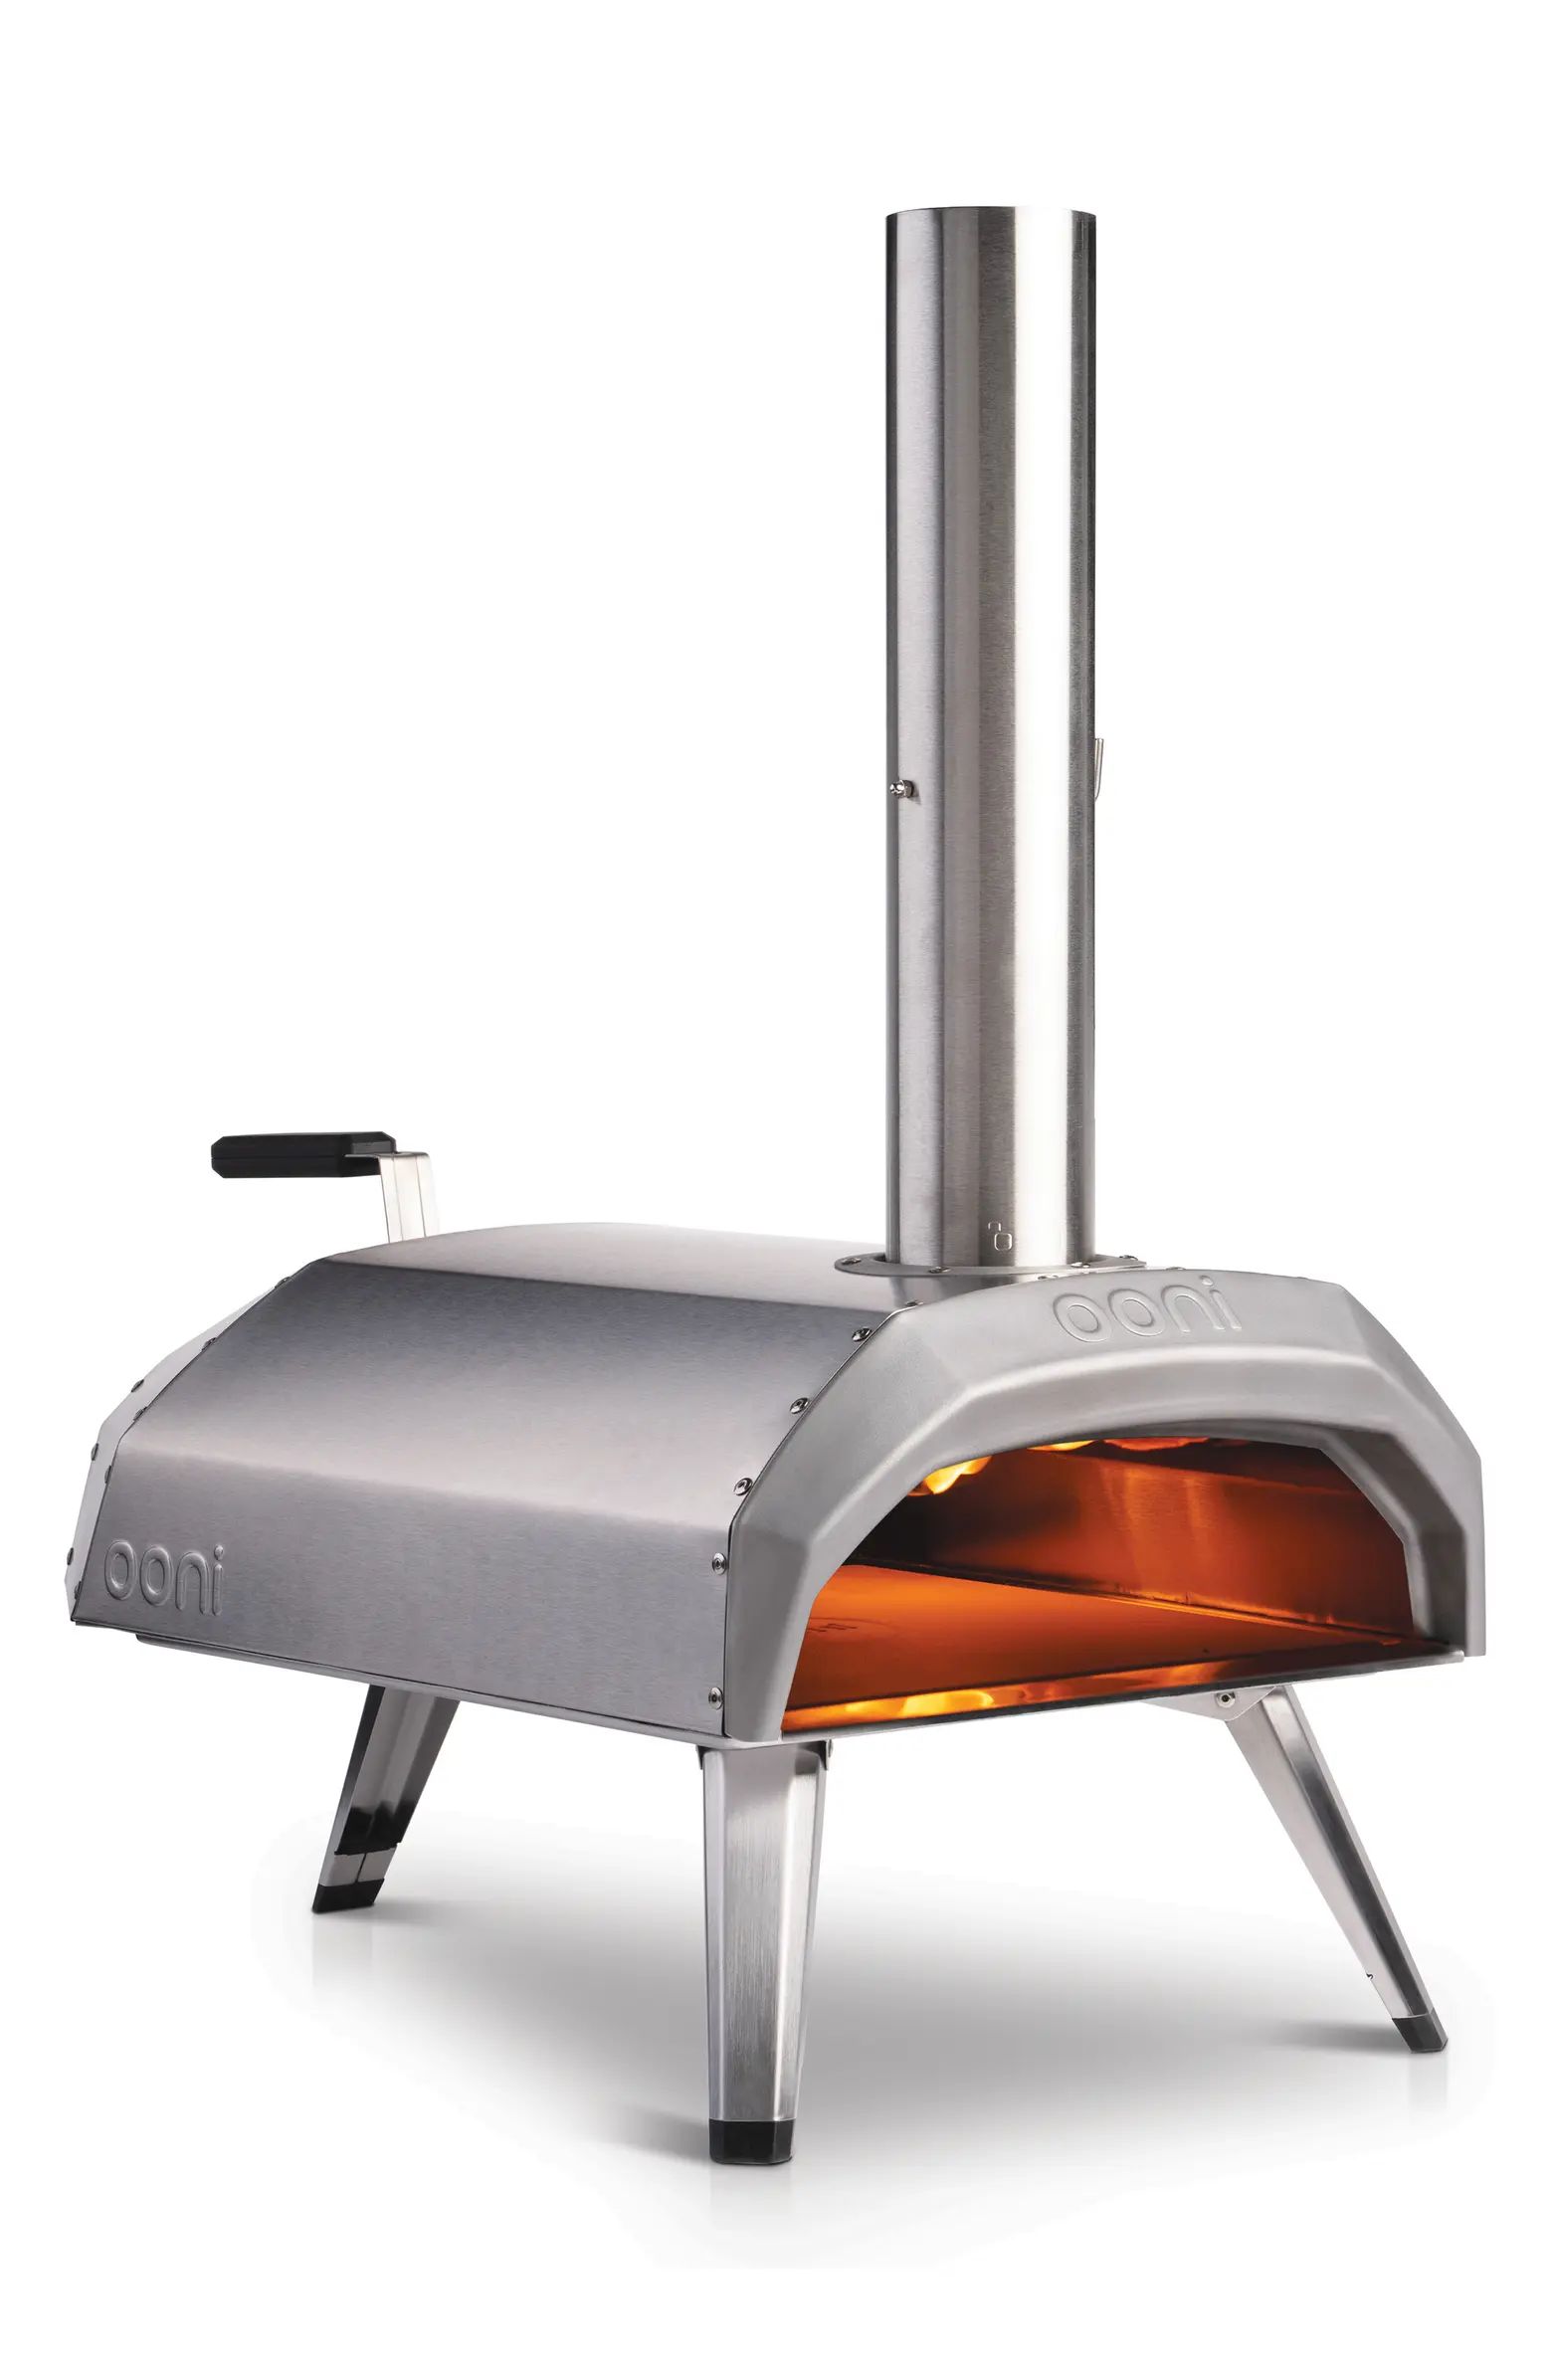 Karu 12 Multifuel Pizza Oven | Nordstrom